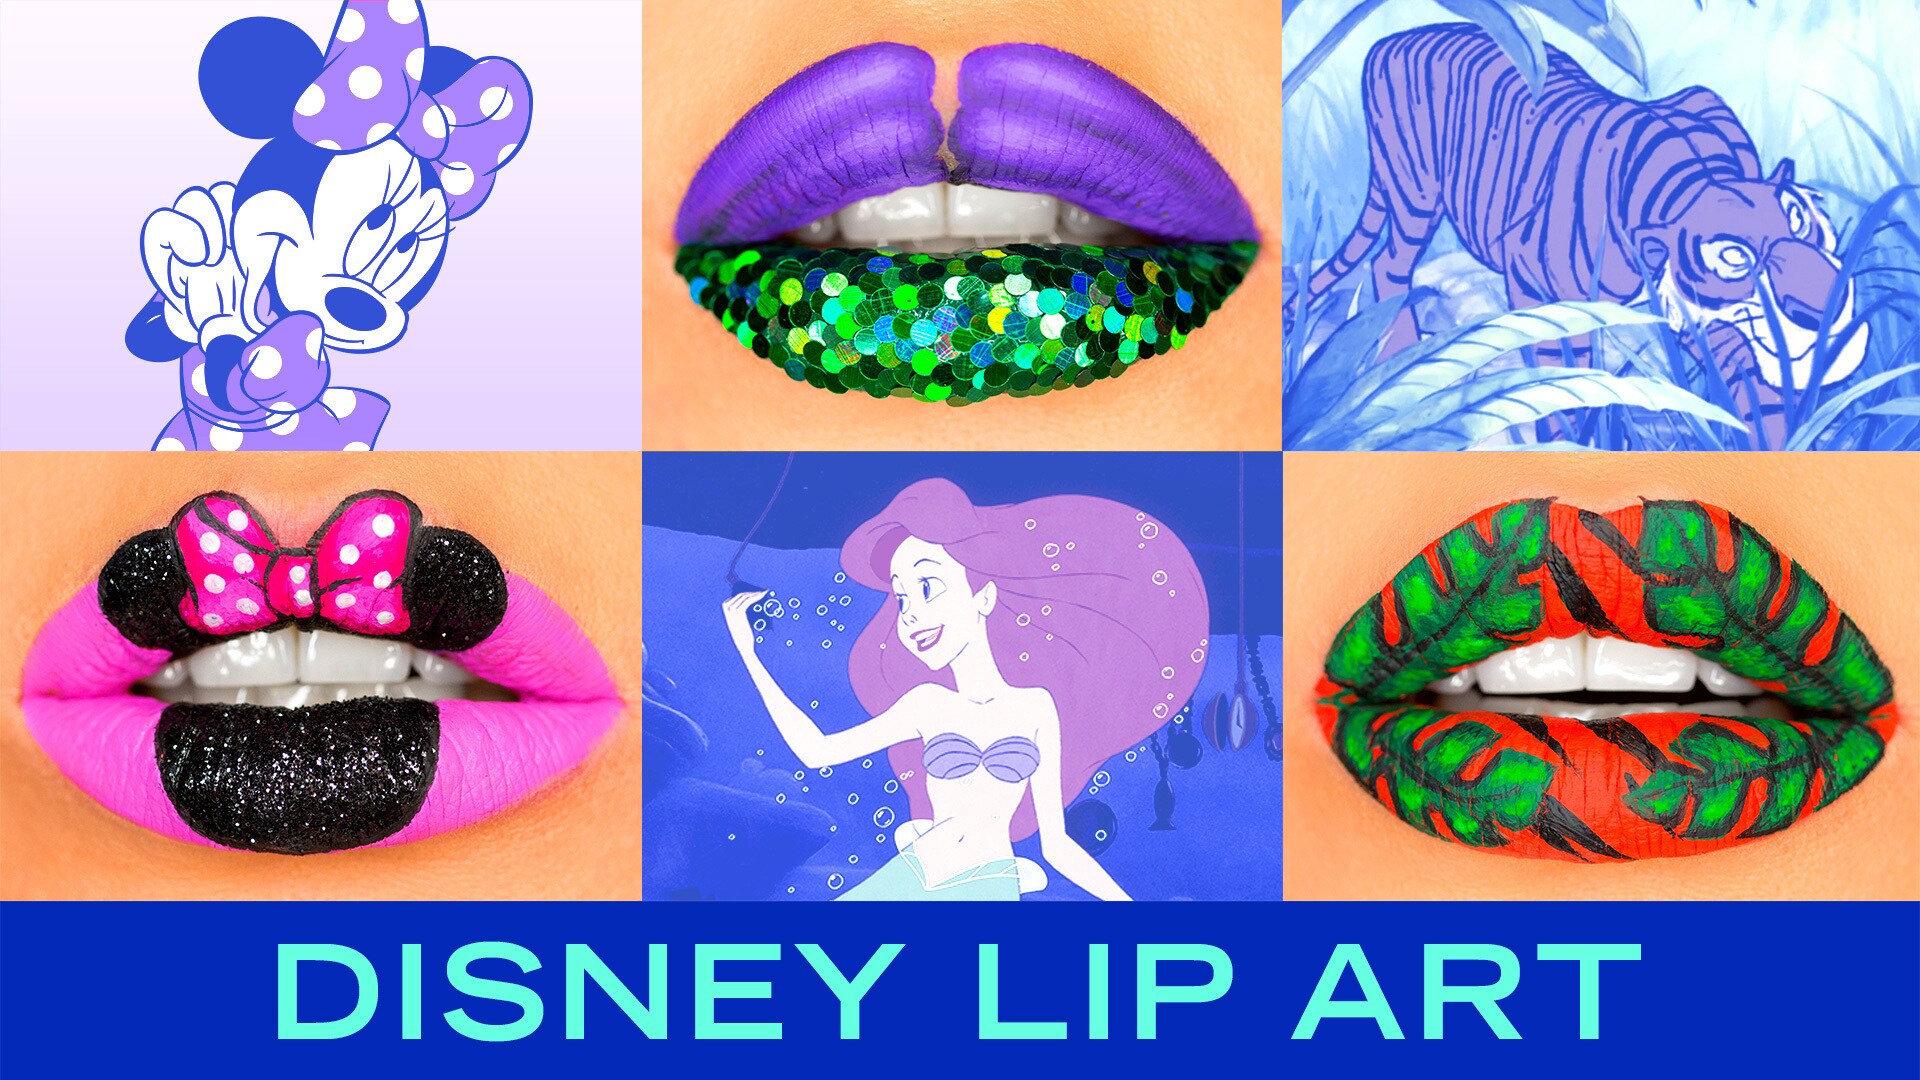 Disney Lip Art With Vlada Haggerty | Disney Style